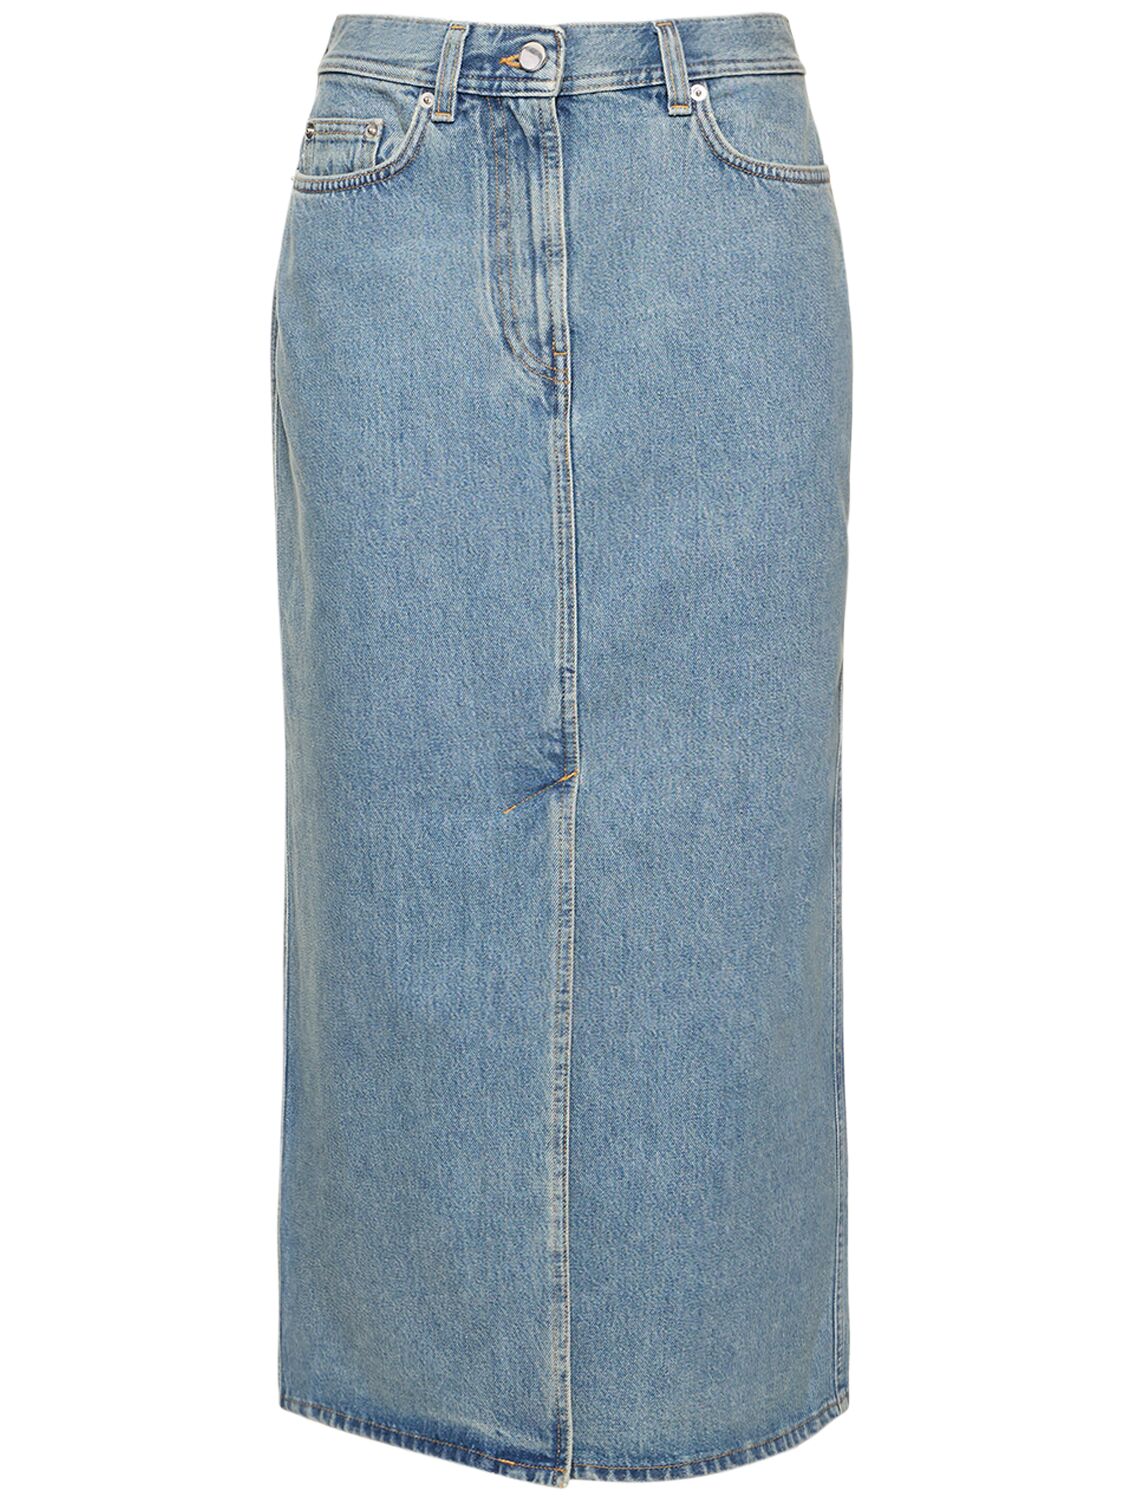 Image of Rona Cotton Denim Long Skirt